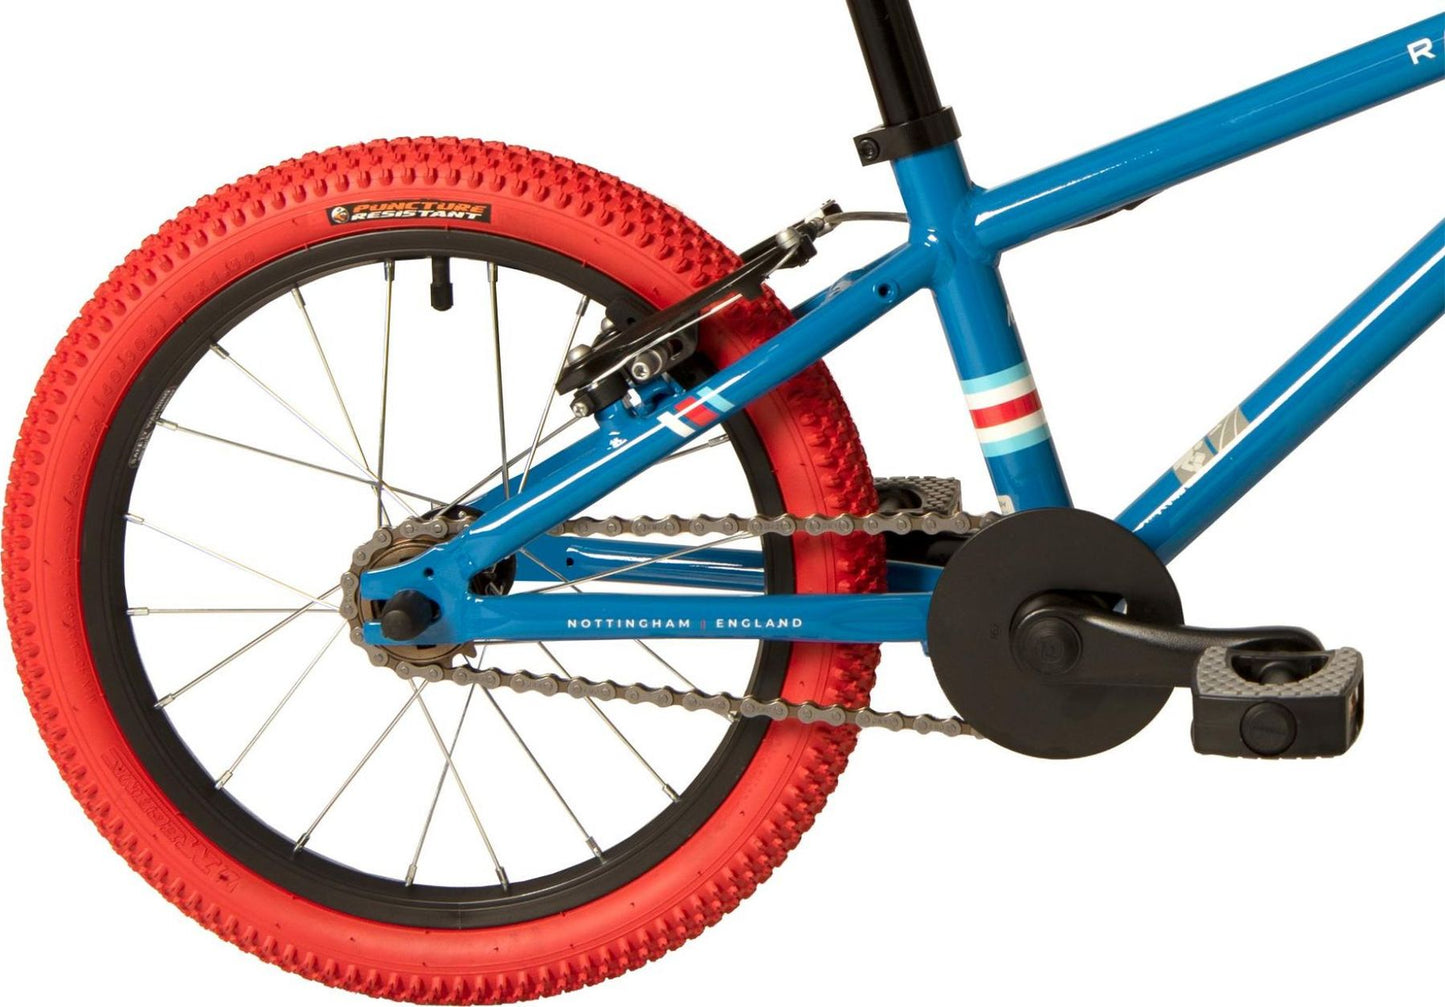 Raleigh POP - 16 inch wheel kids bike